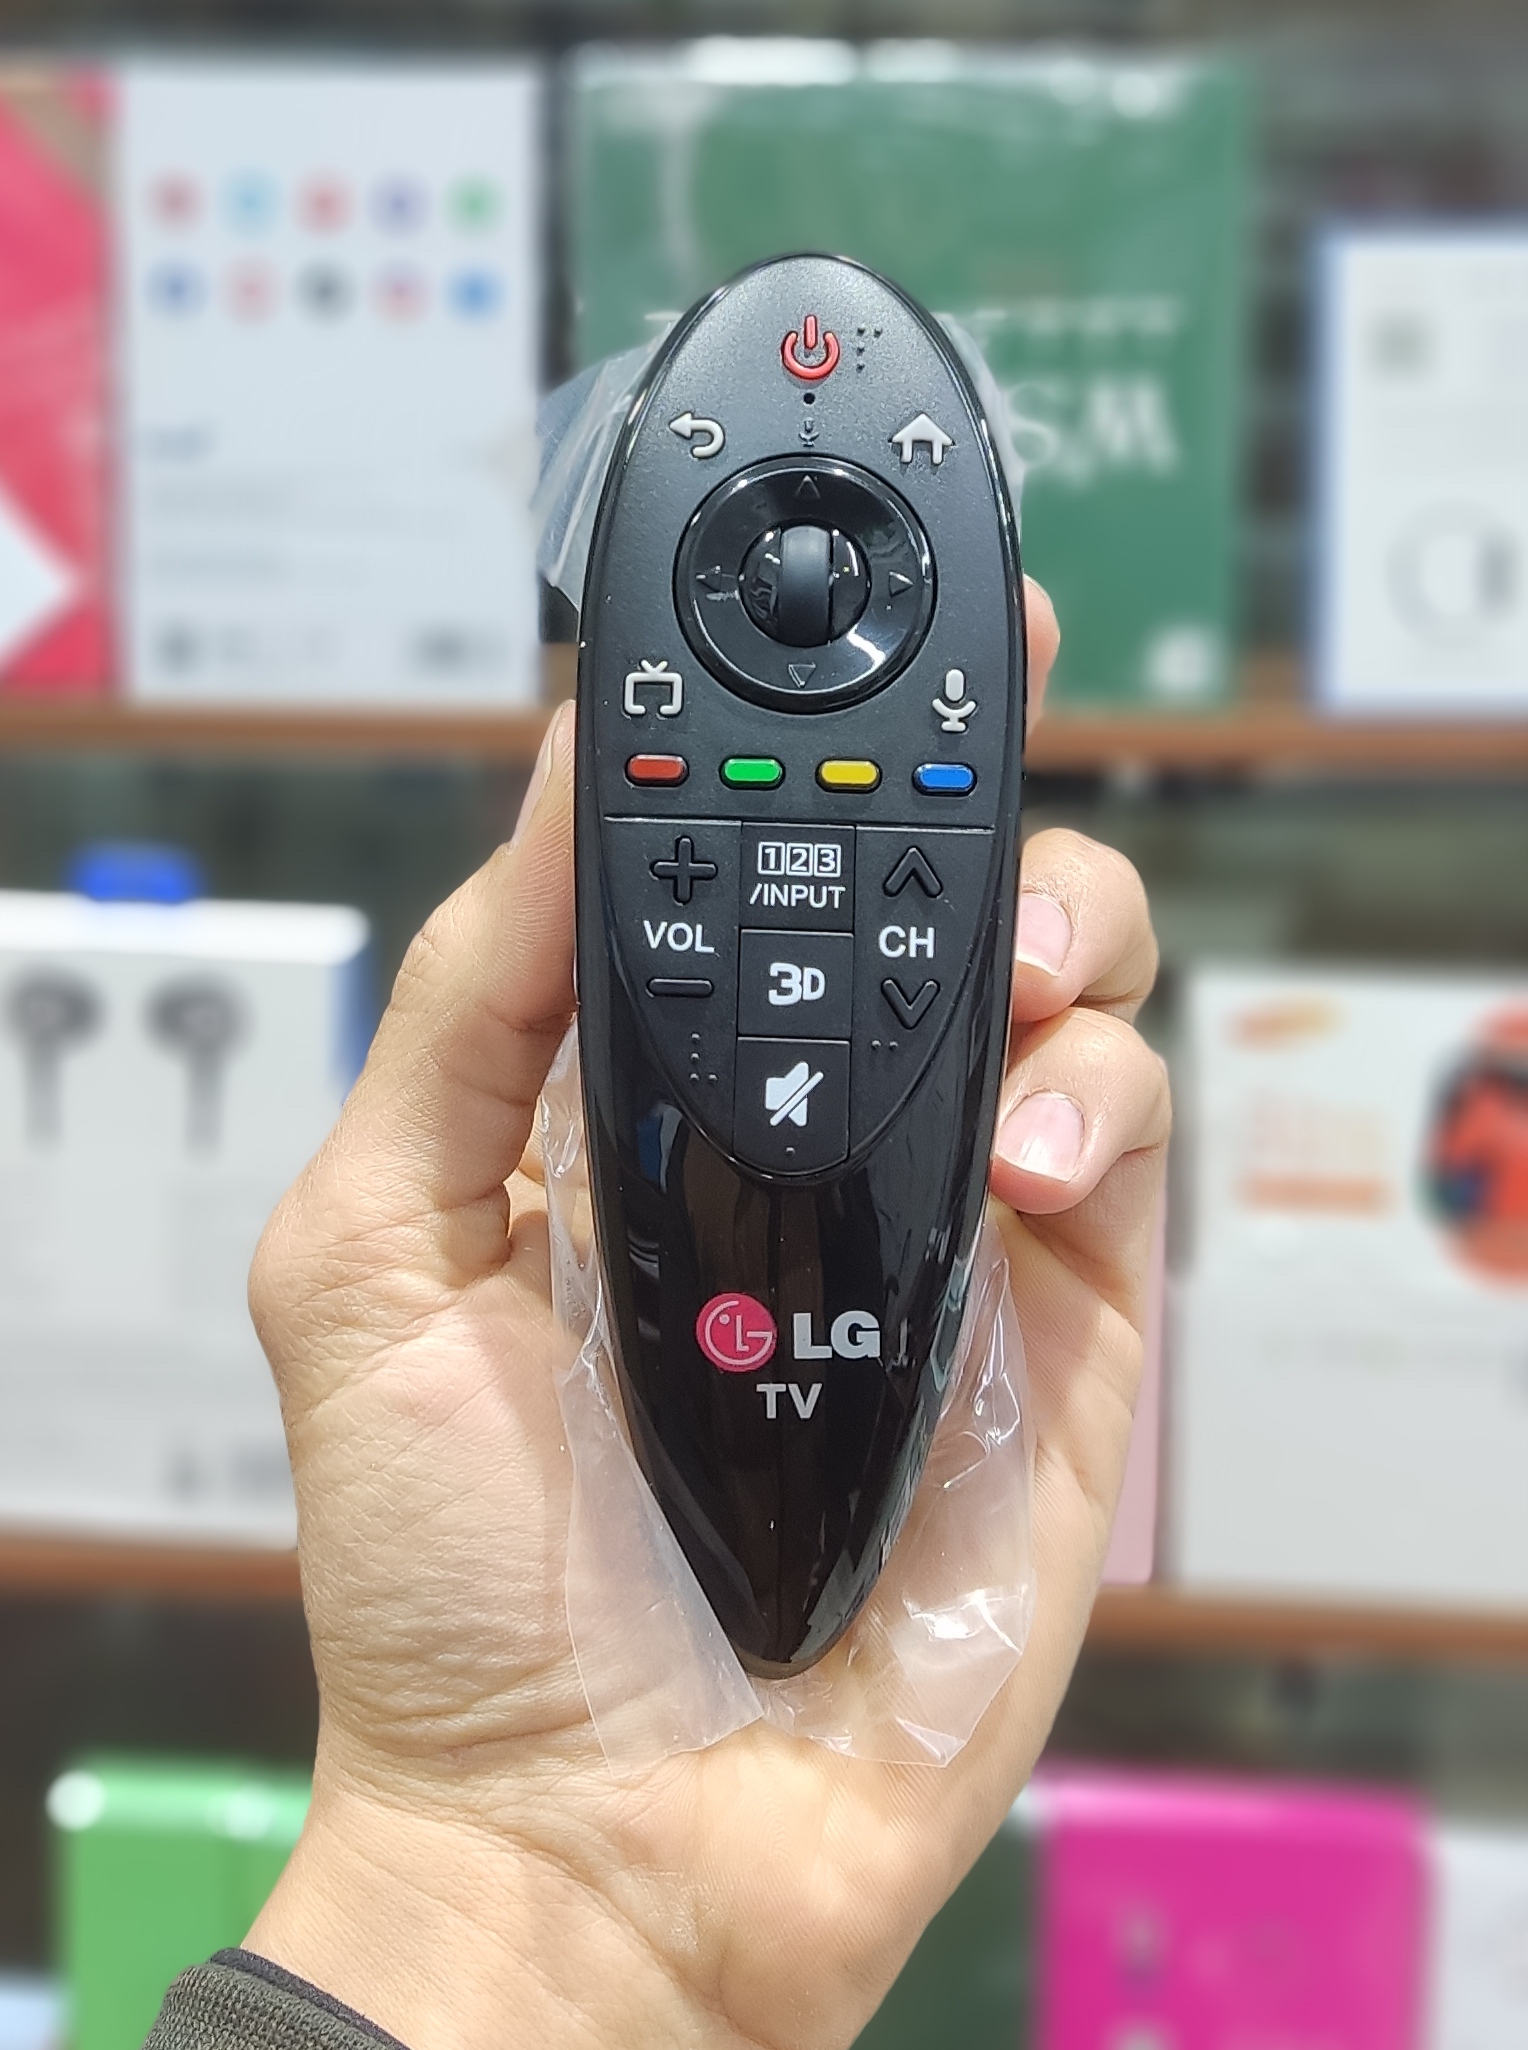 کنترل تلویزیون ال جی مدل  AN-MR500 (غیر هوشمند)